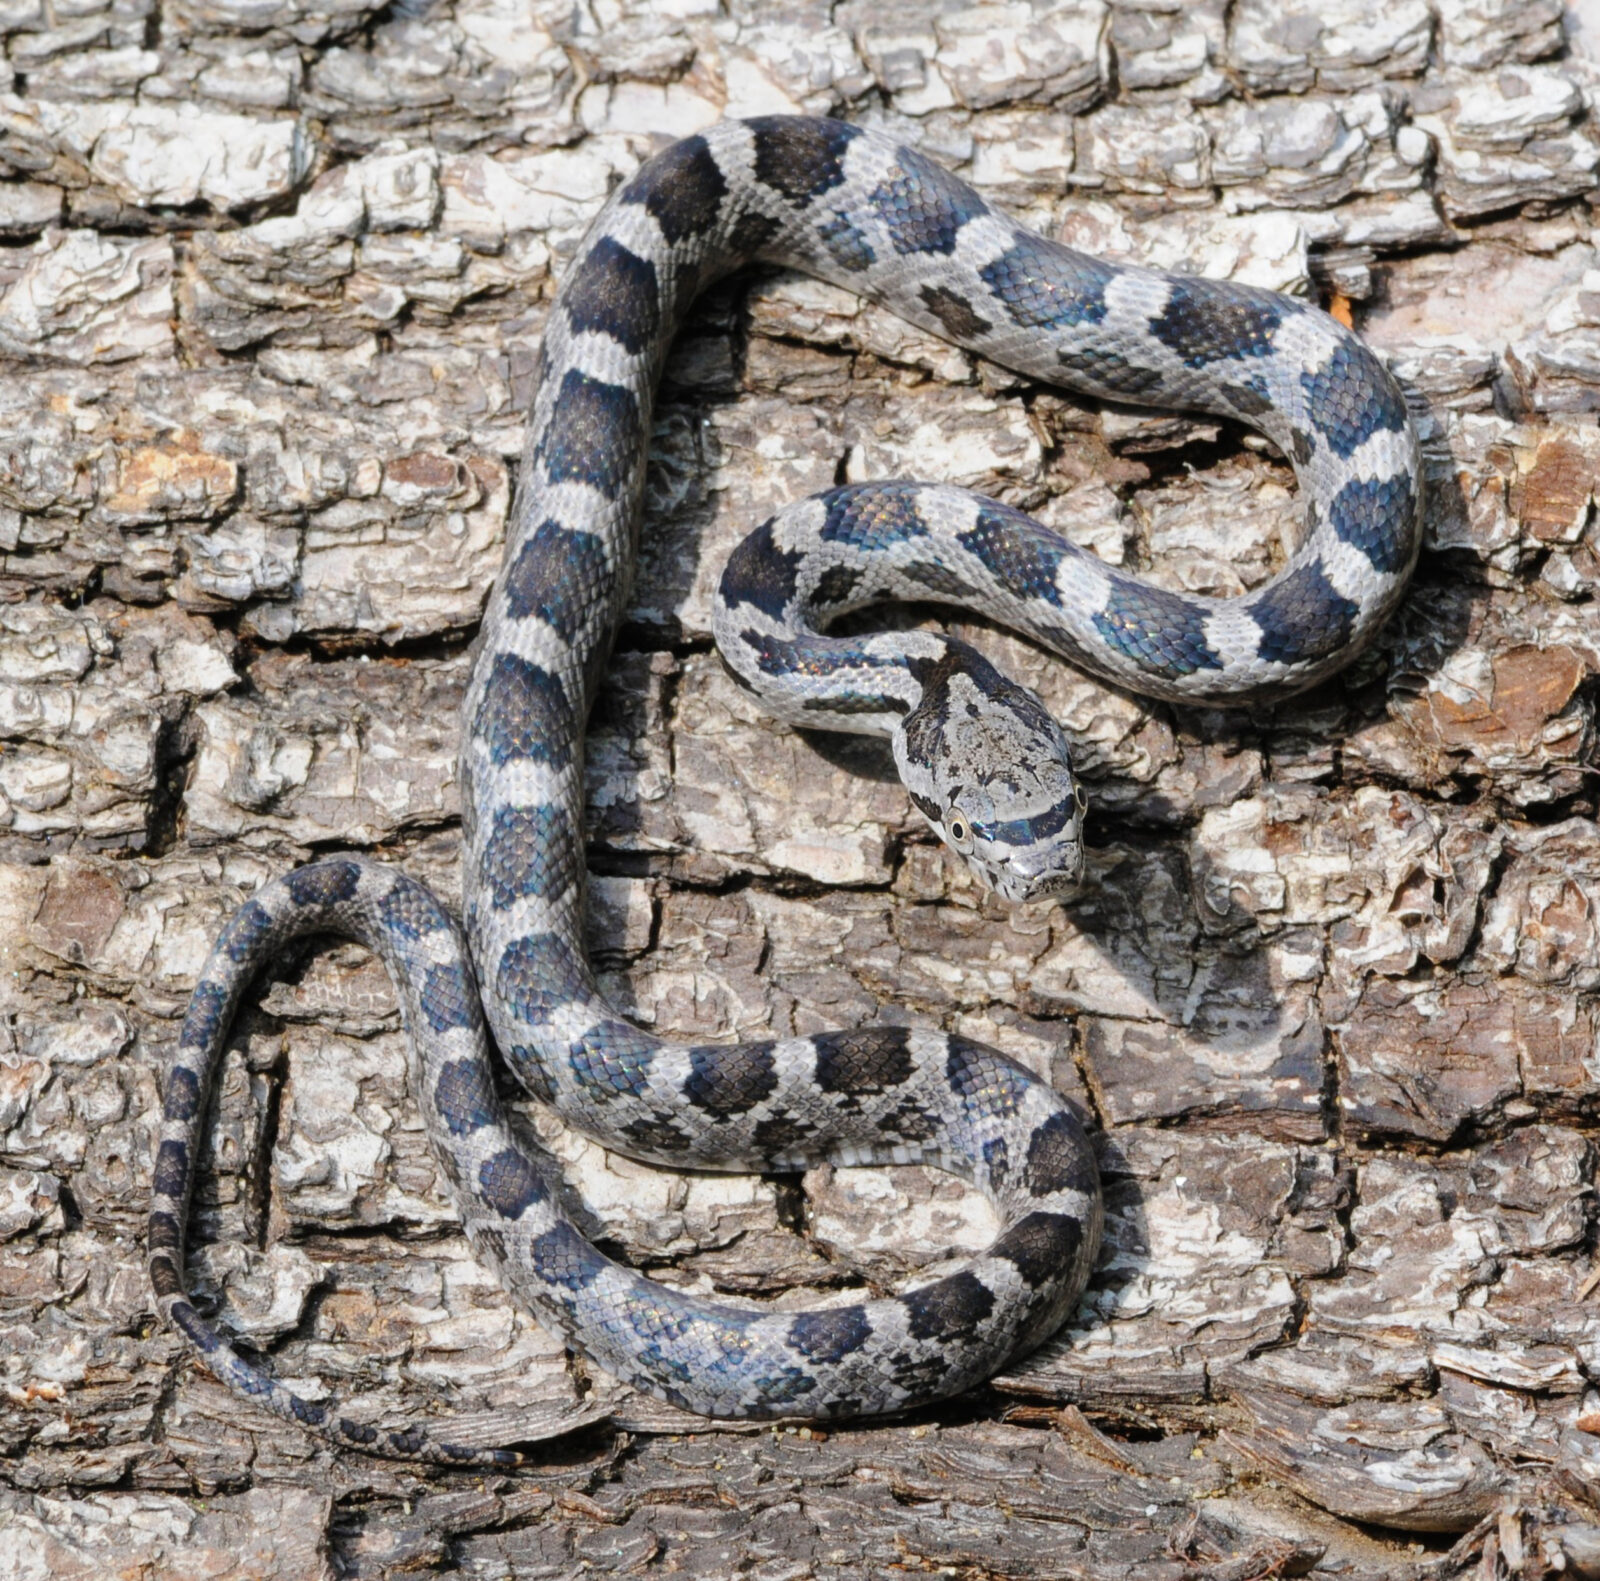 State Laws Prohibit Killing Snakes In Georgia South Carolina